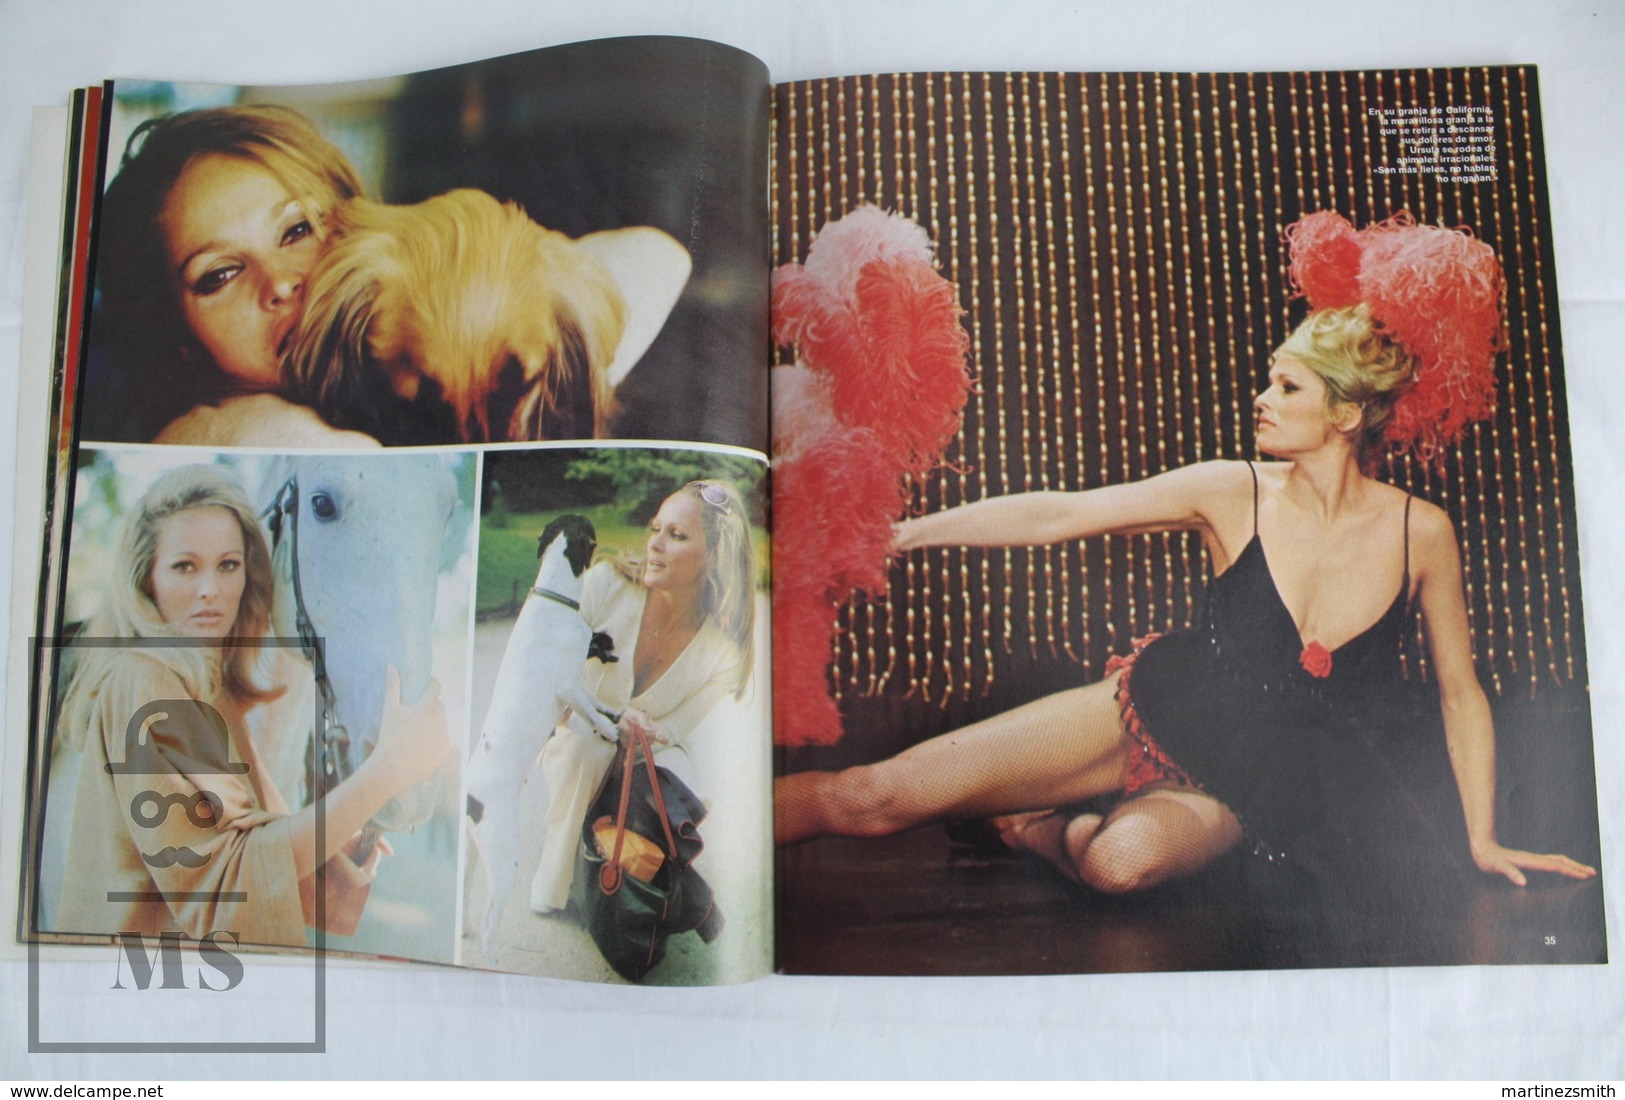 1970's Spanish Secret Life Magazine Dedicated to Ursula Andress Cinema Actress